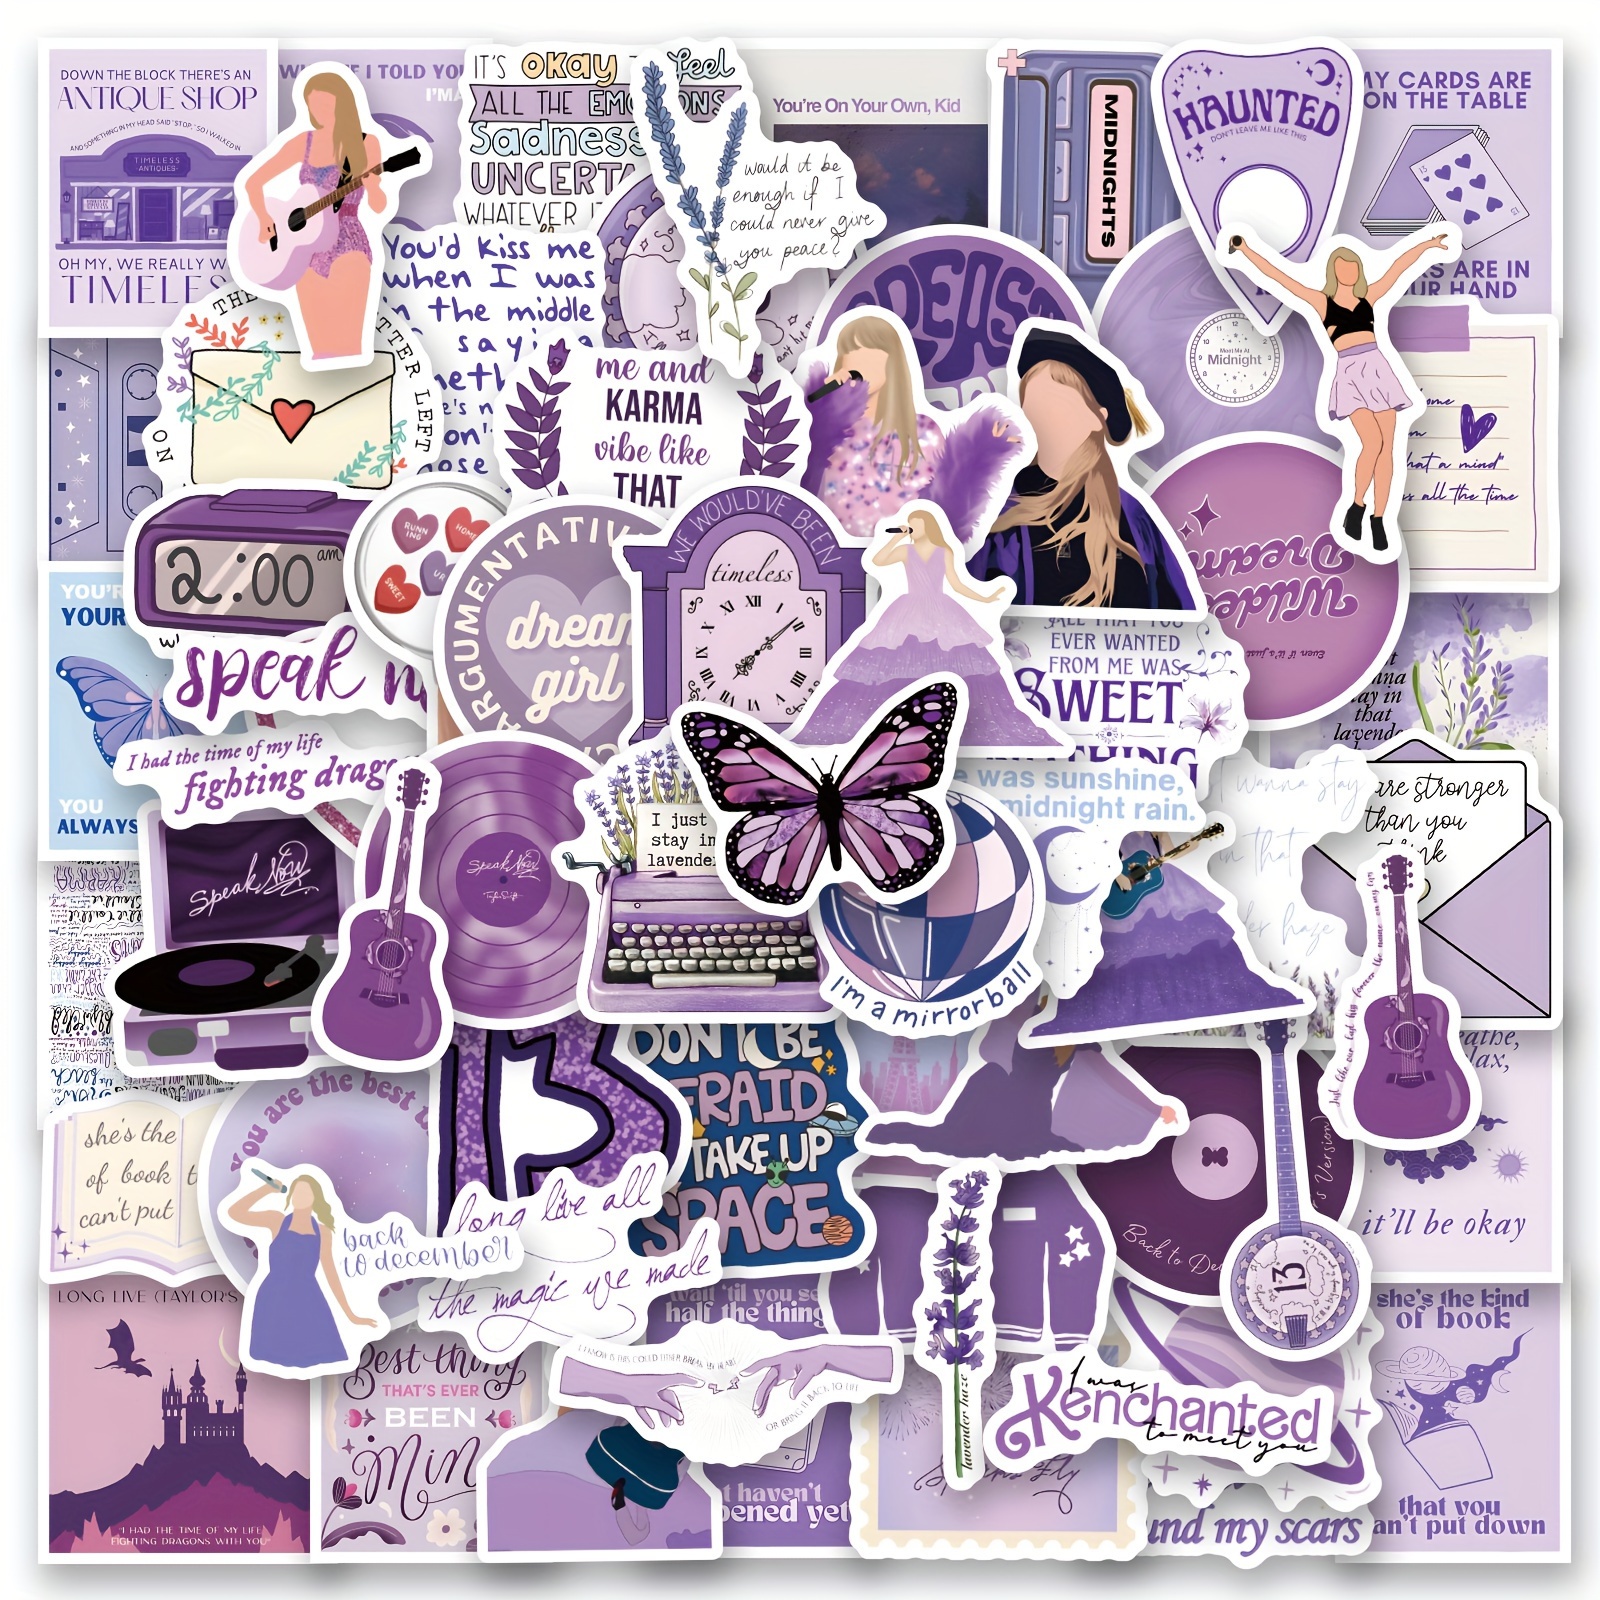  200PCS Taylor Music Sticker for Adult, Female Pop Singer Swift  Ablum Stickers for Teen Girl, Waterproof Vinyl Sticker for Water Bottle  Laptop Phone Skateboard Bike Party Favors : Toys & Games